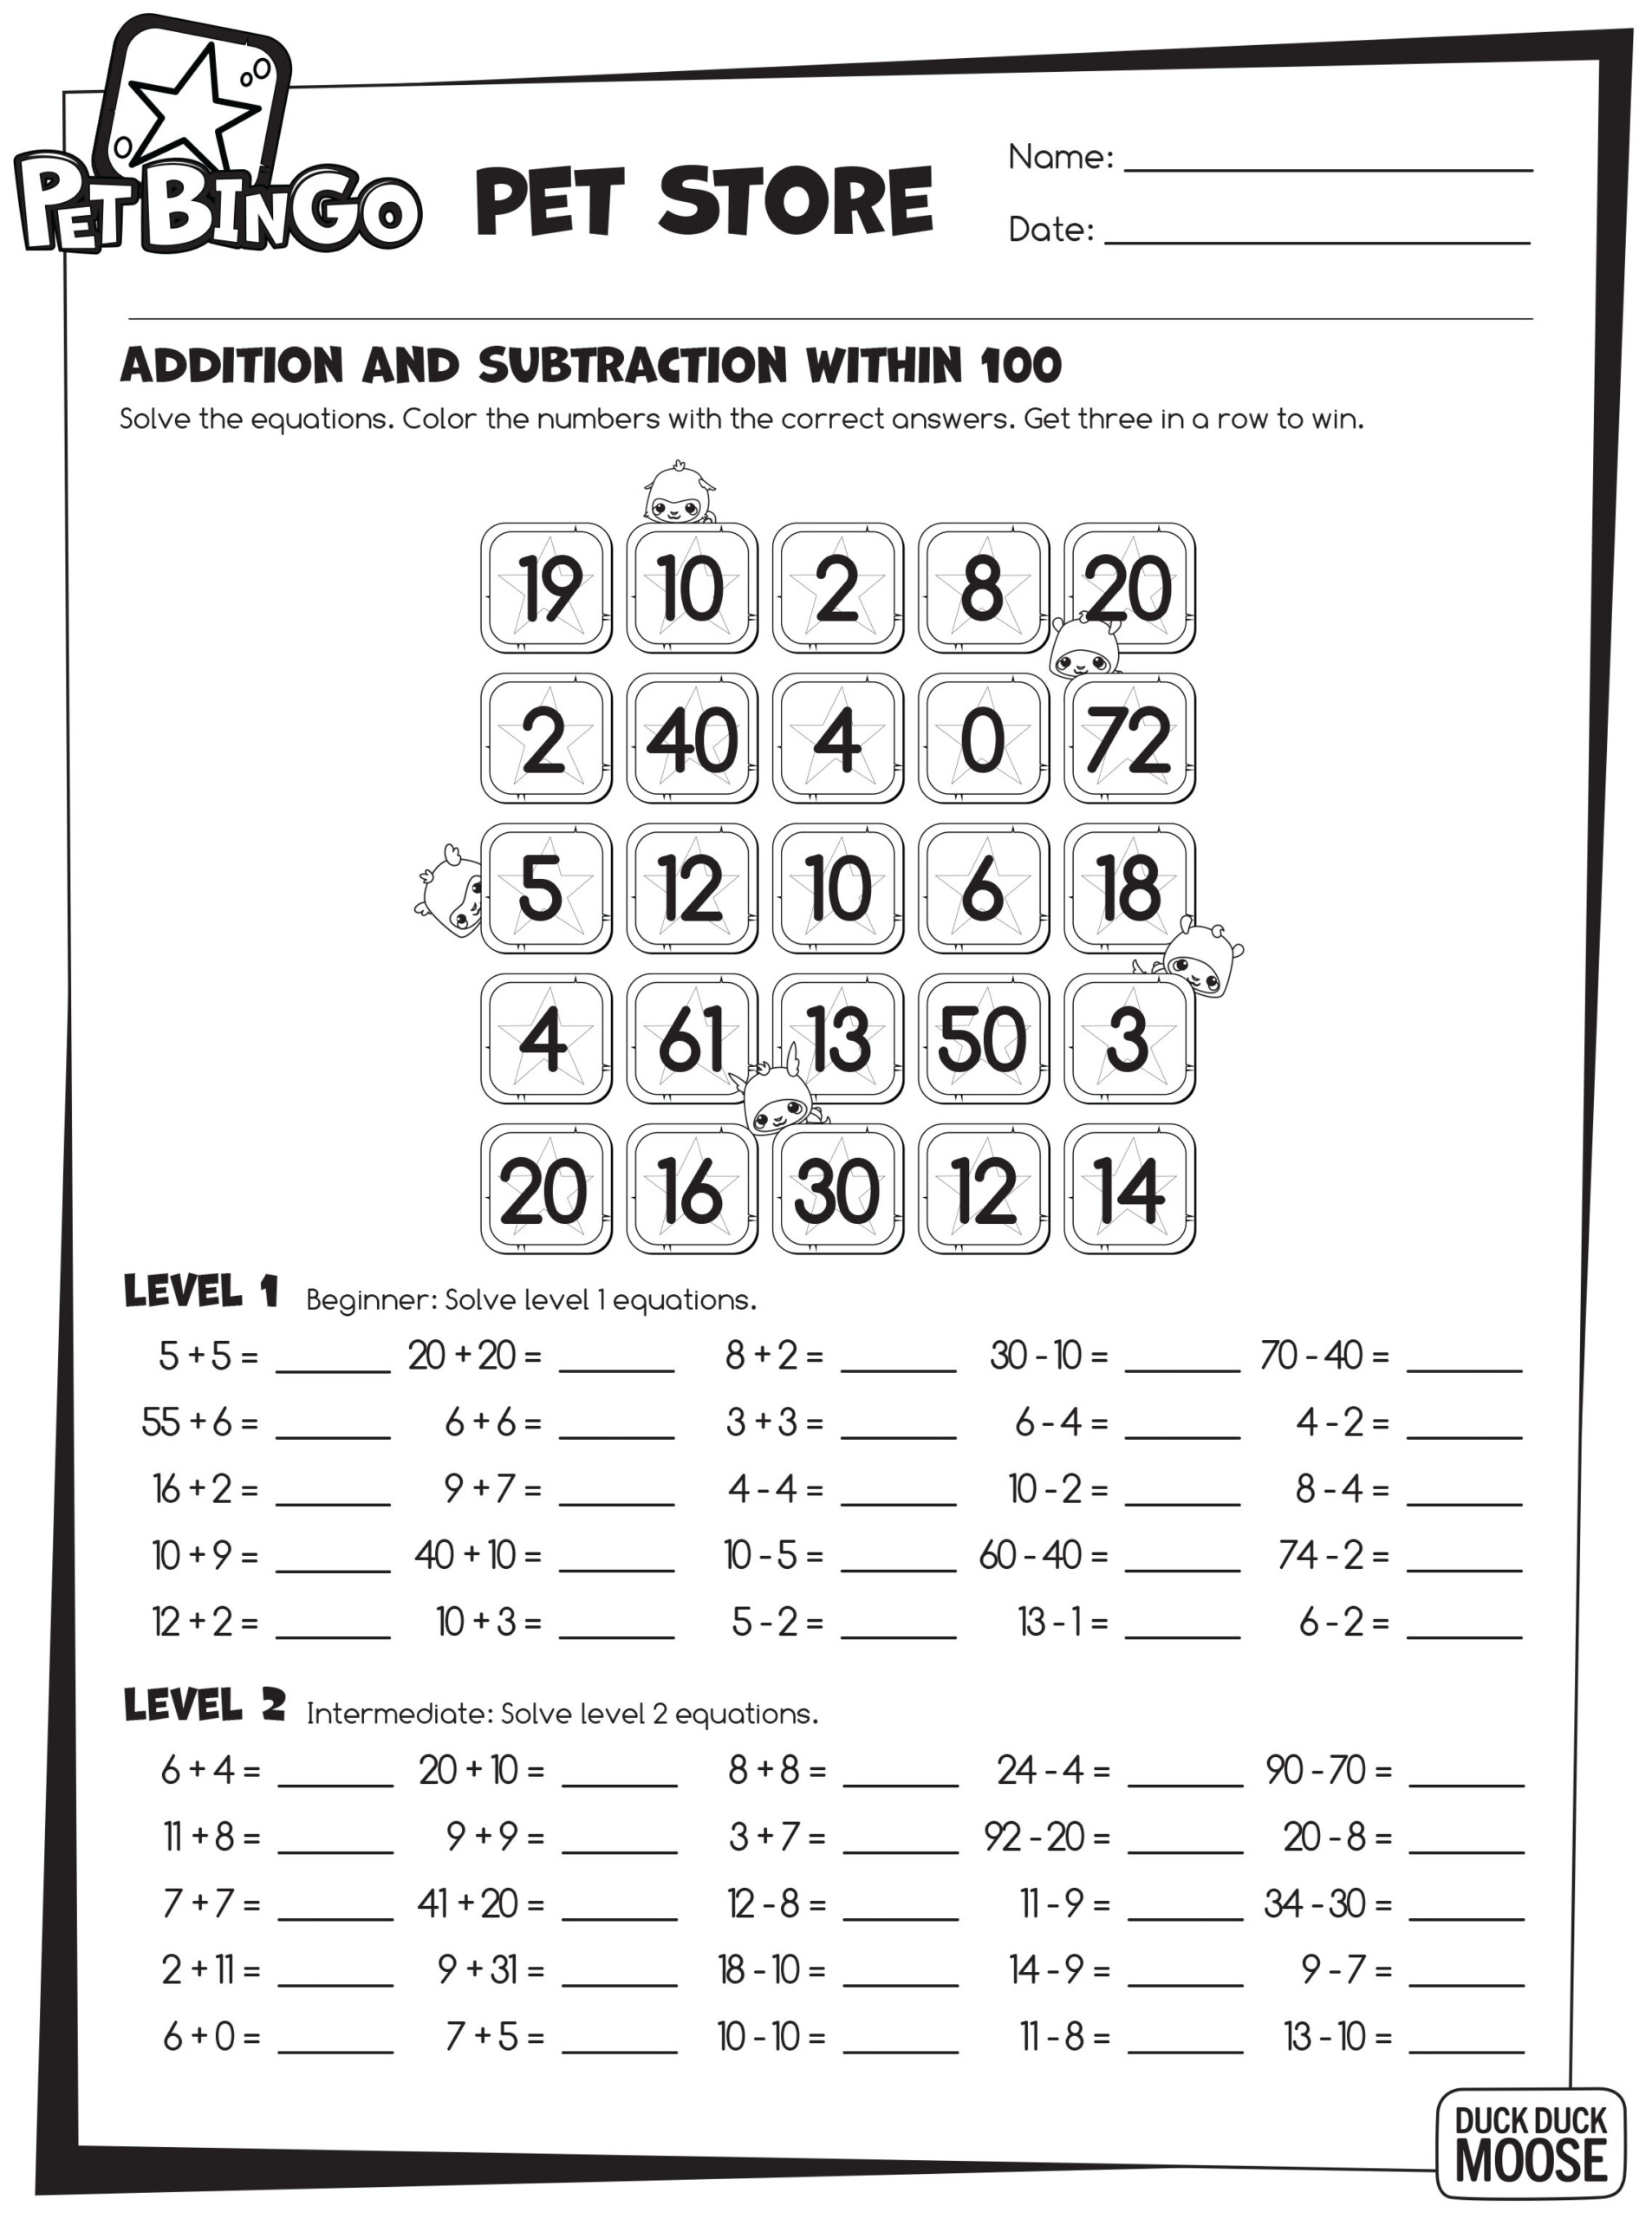 math-multiplication-games